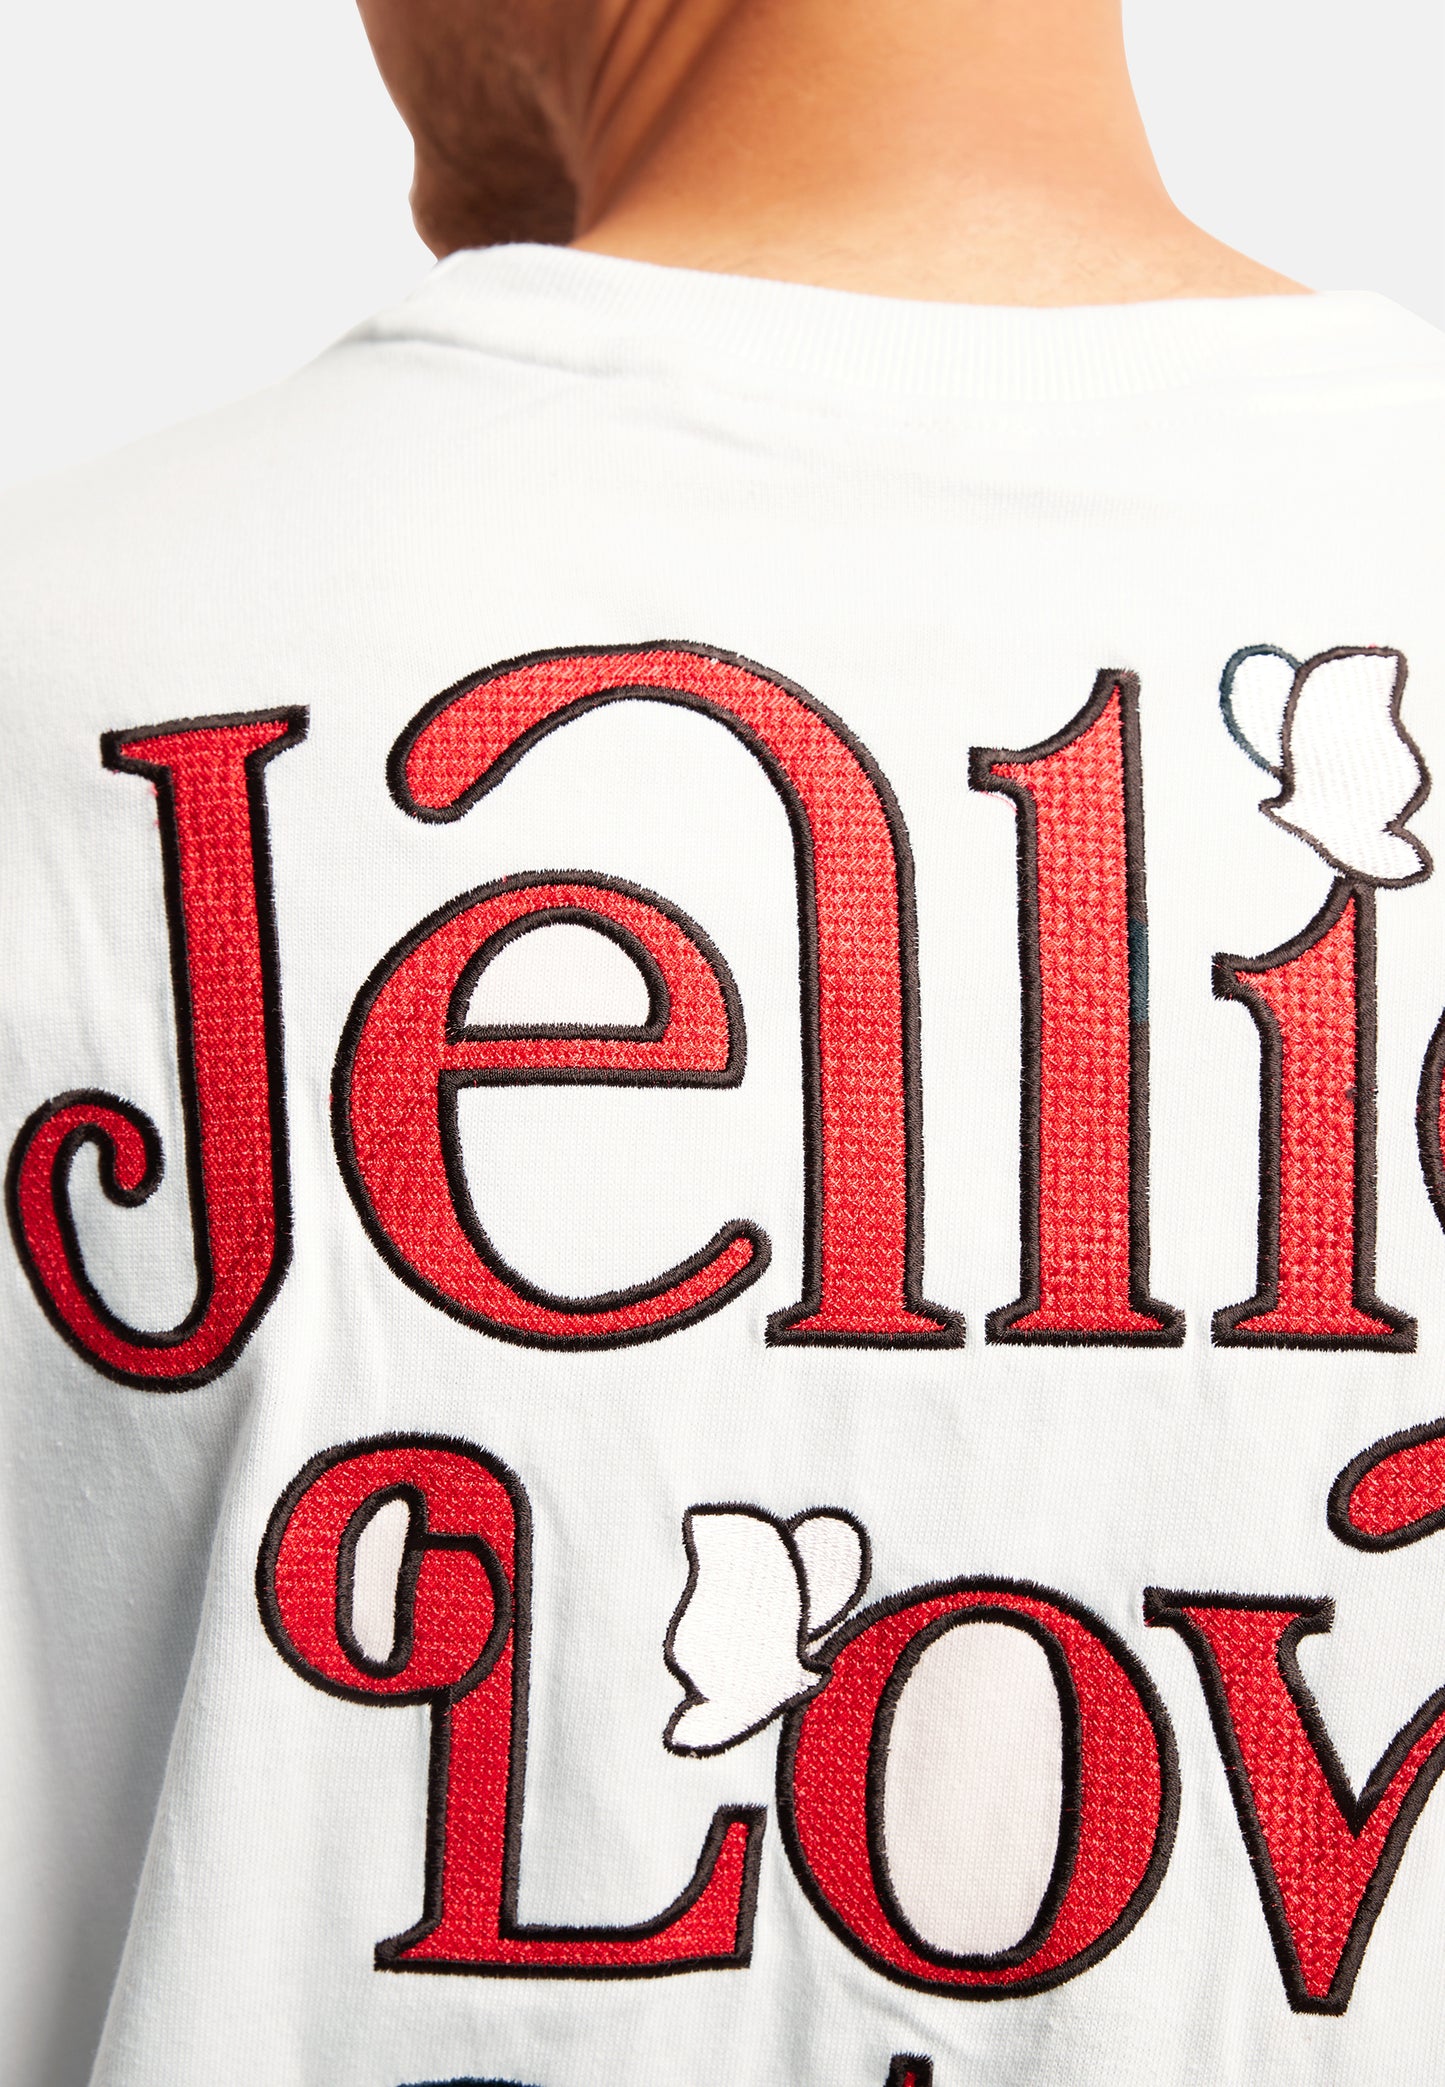 Jellies Love Club T-Shirt